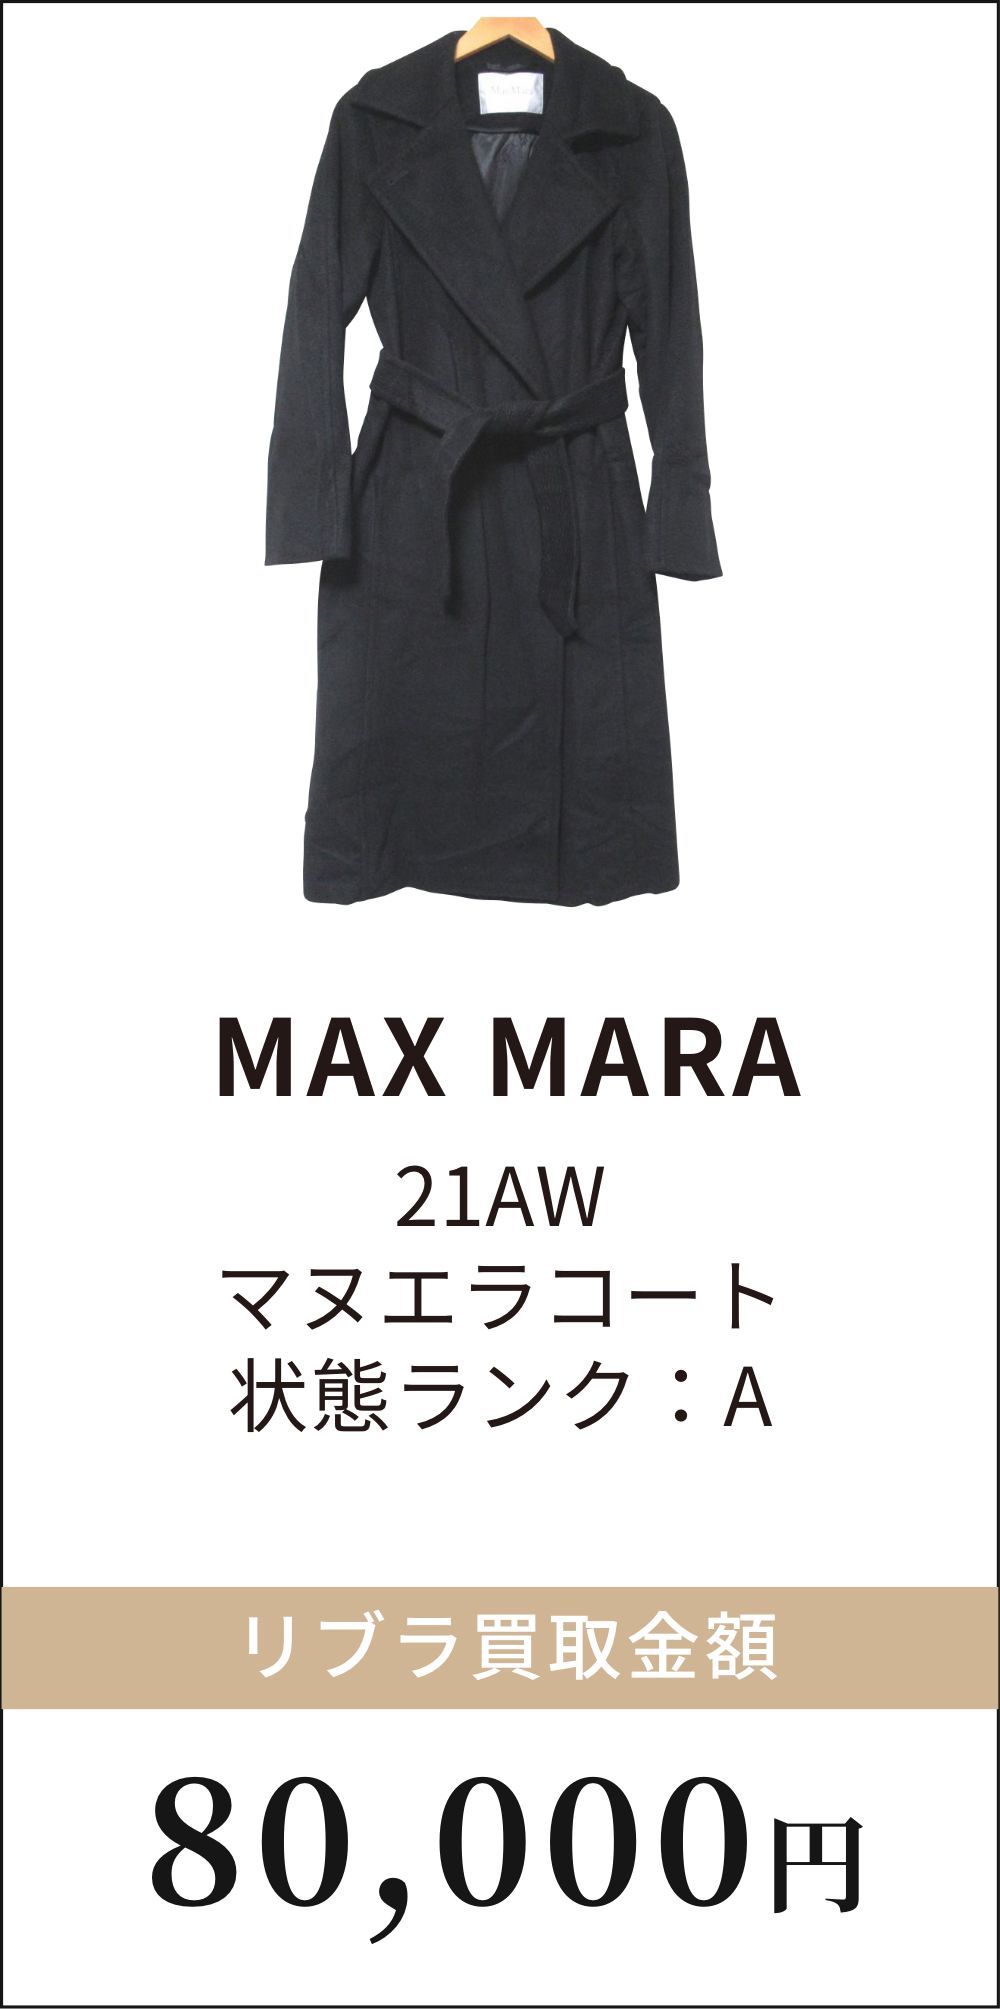 MAX MARA 21AW マヌエラコート